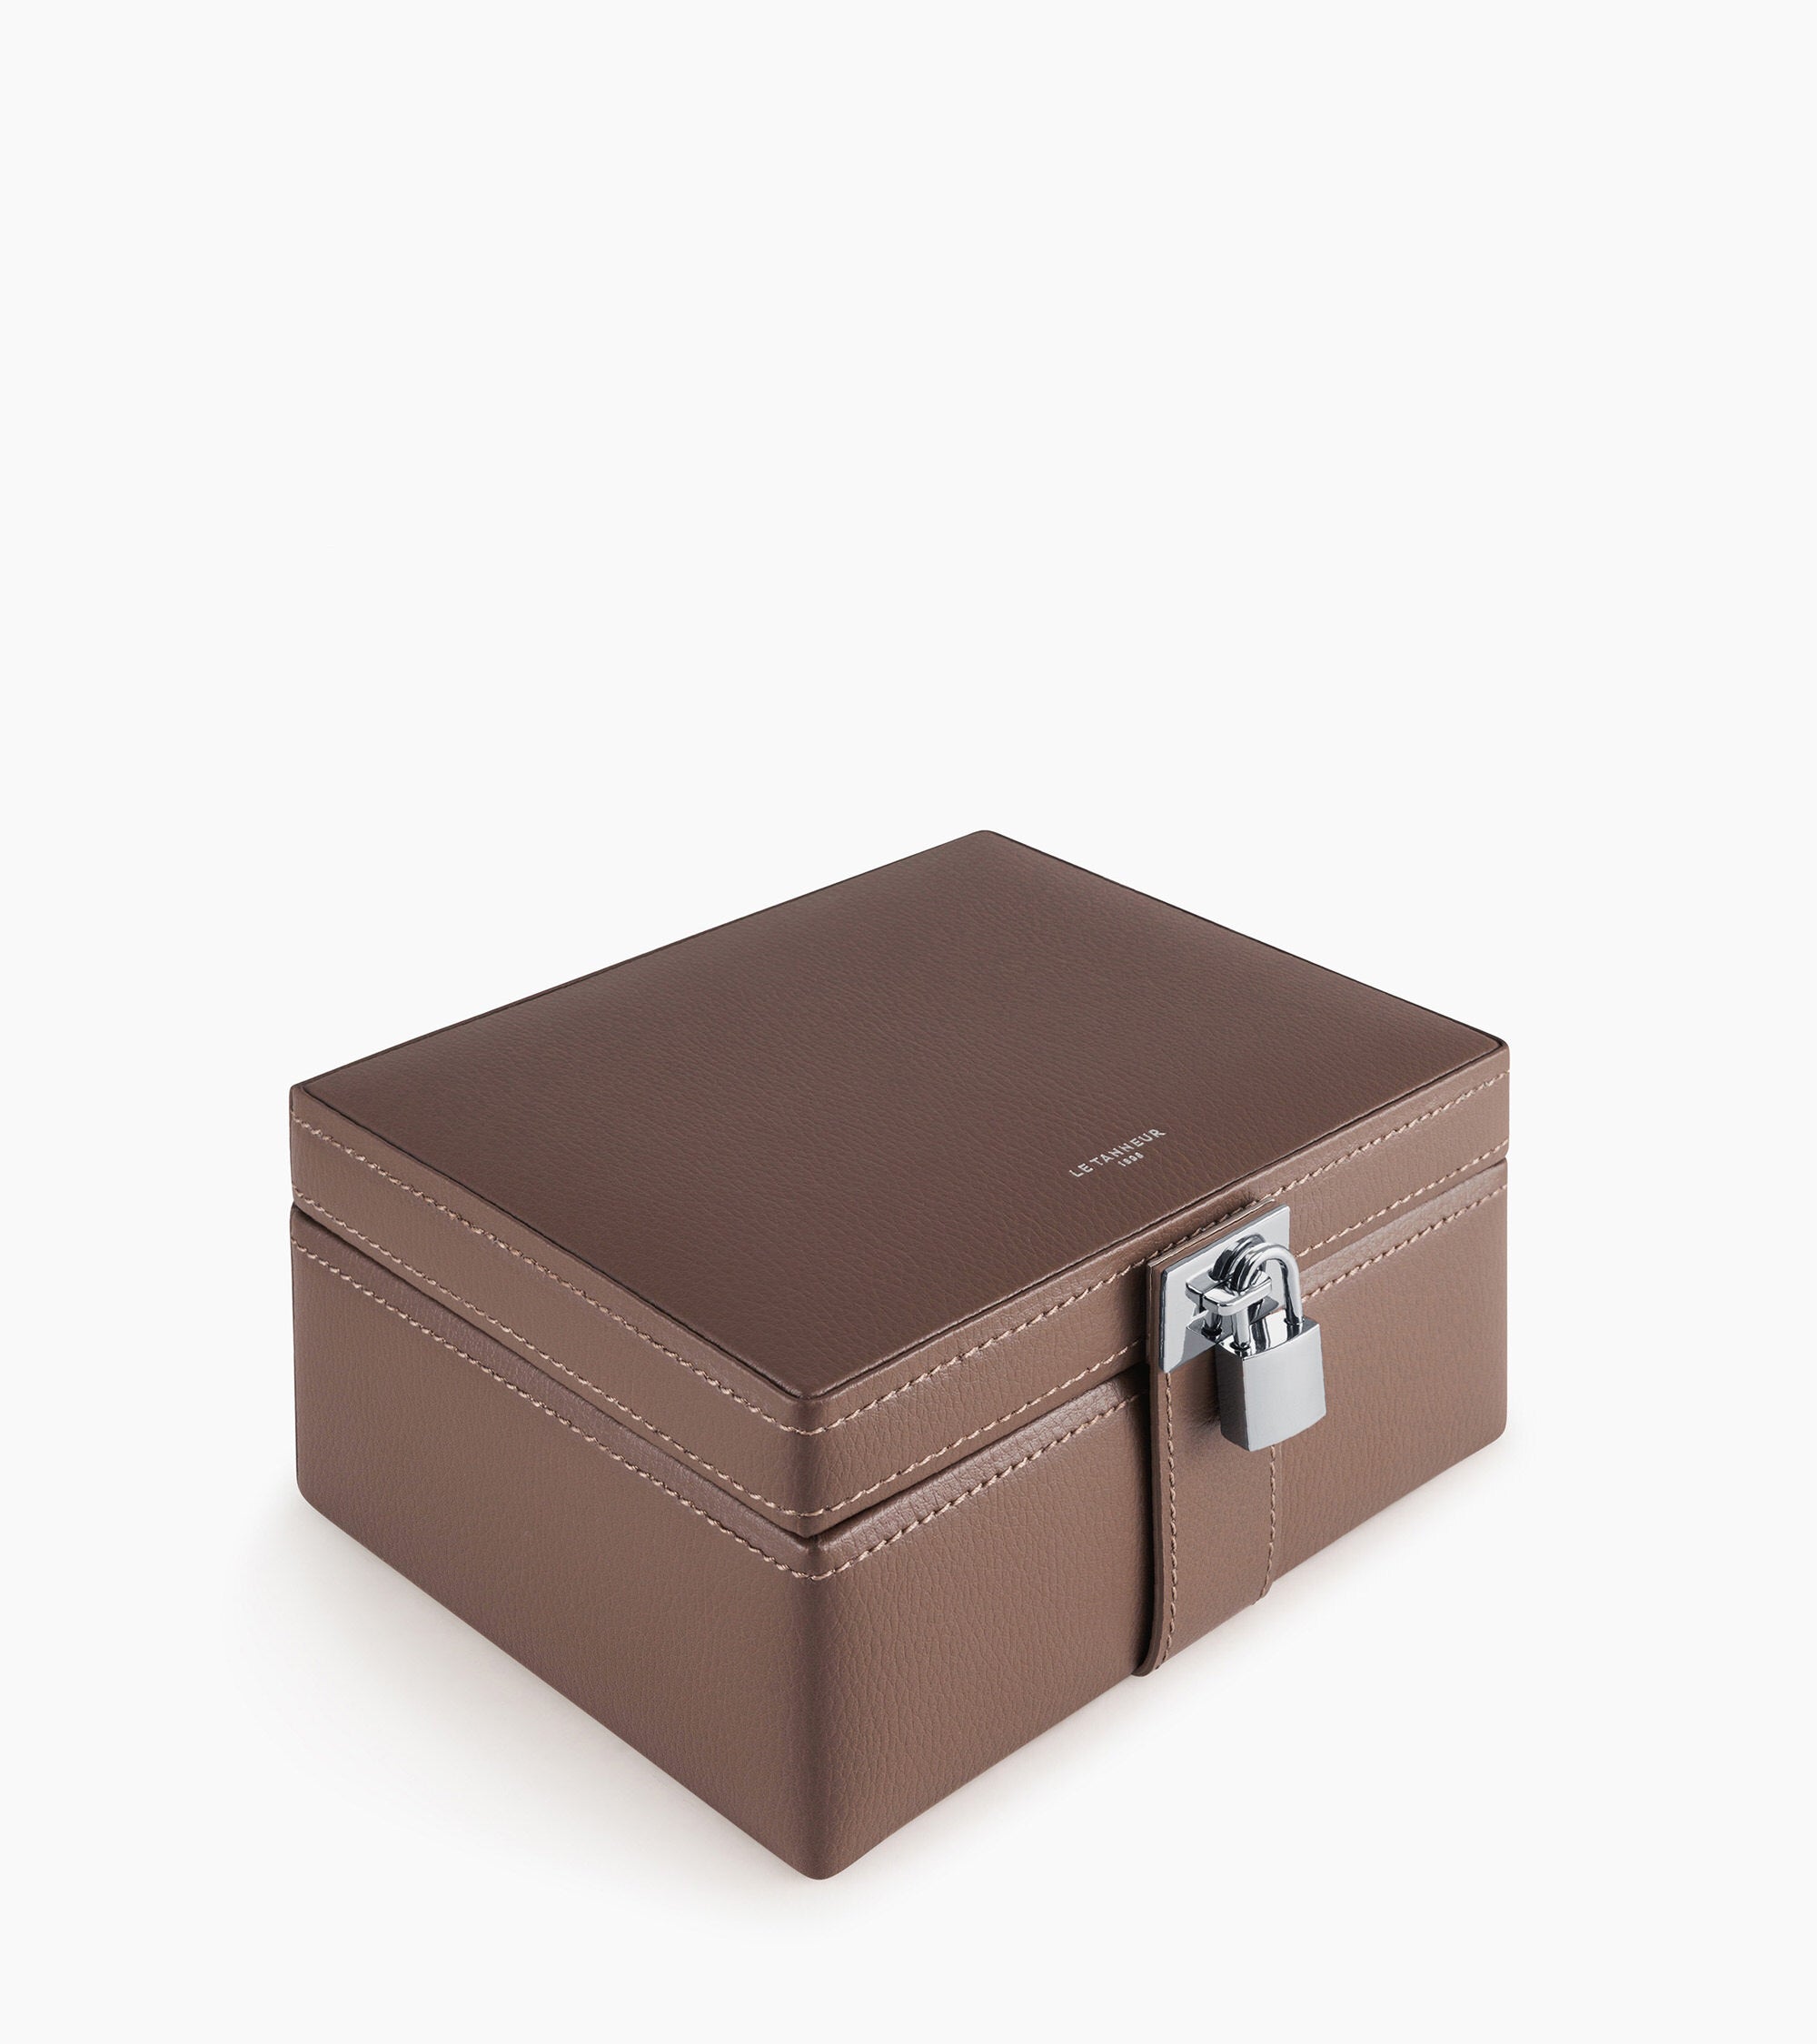 Medium jewelry box